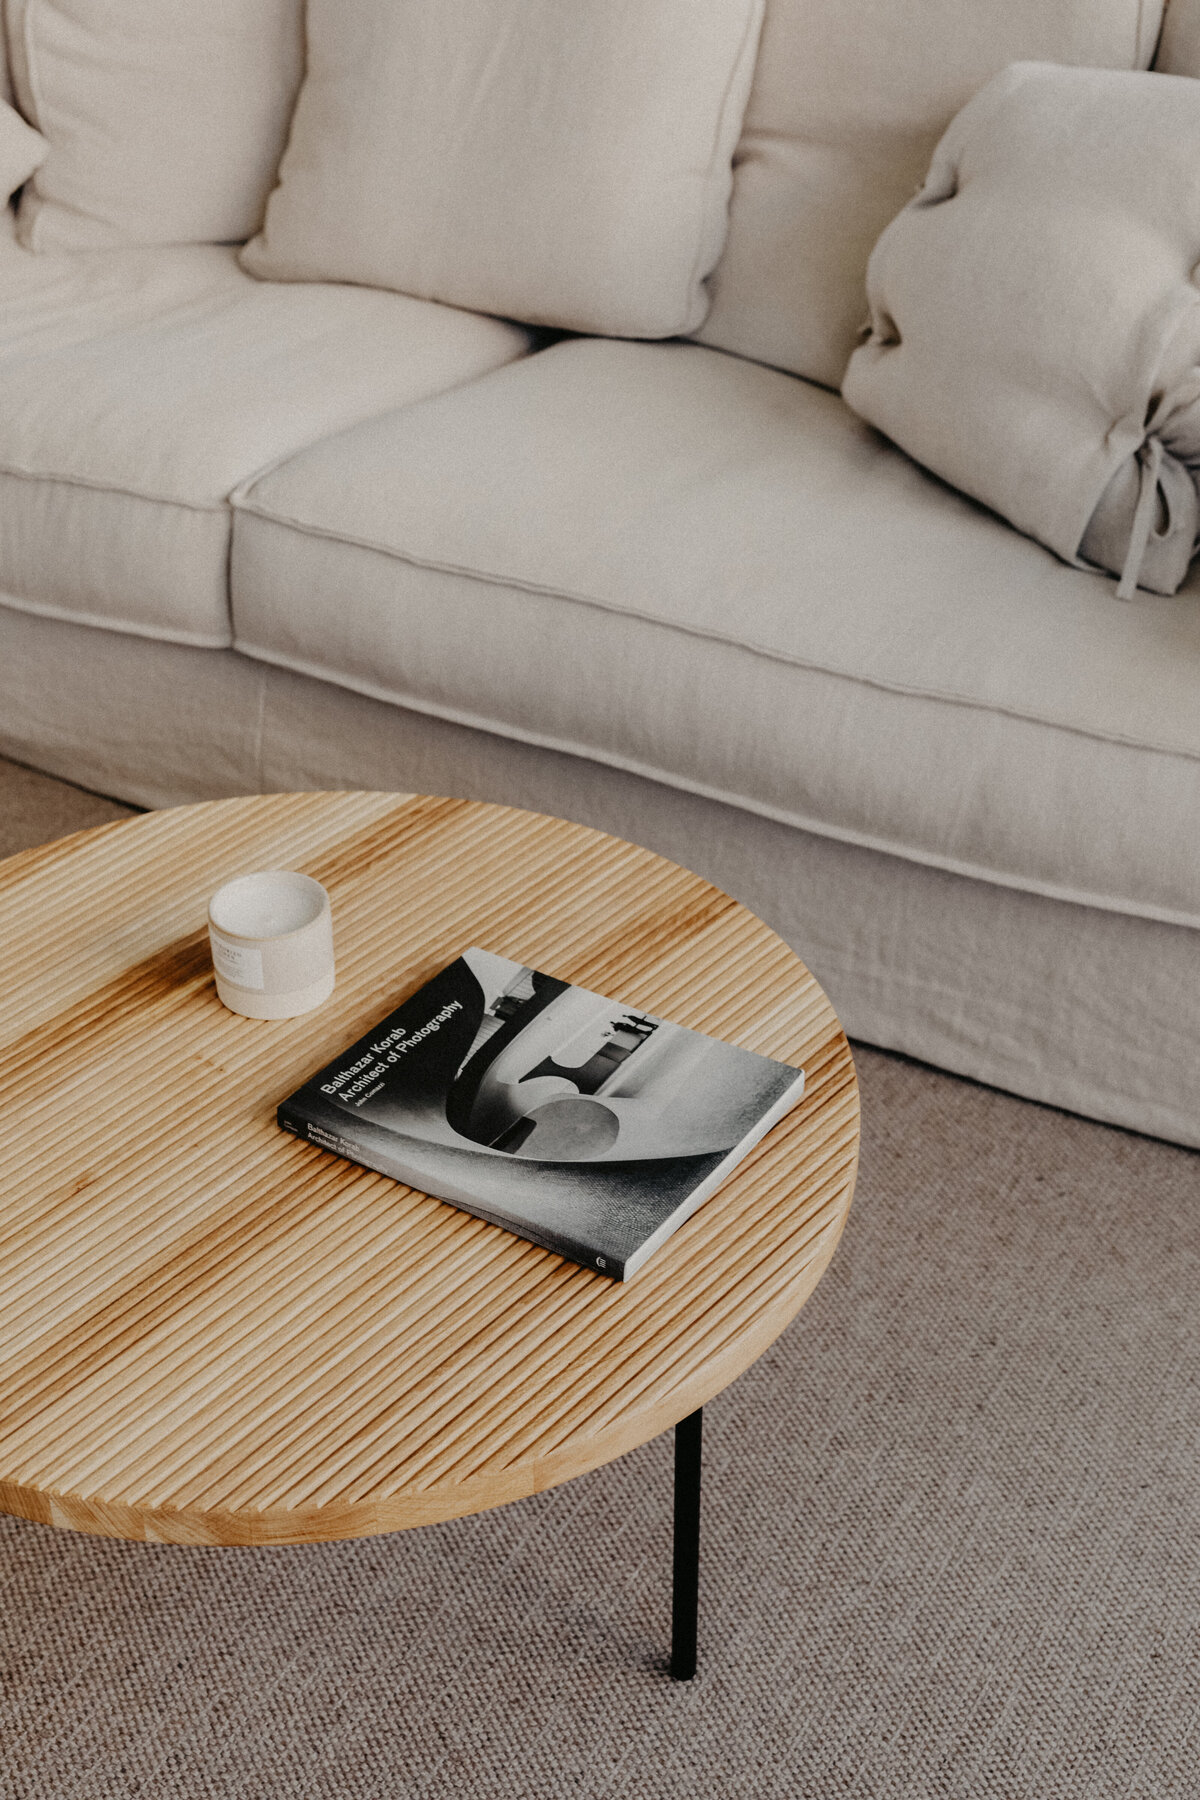 kaboompics_Wooden coffee table - book - candle - linen sofa - pillows - carpet